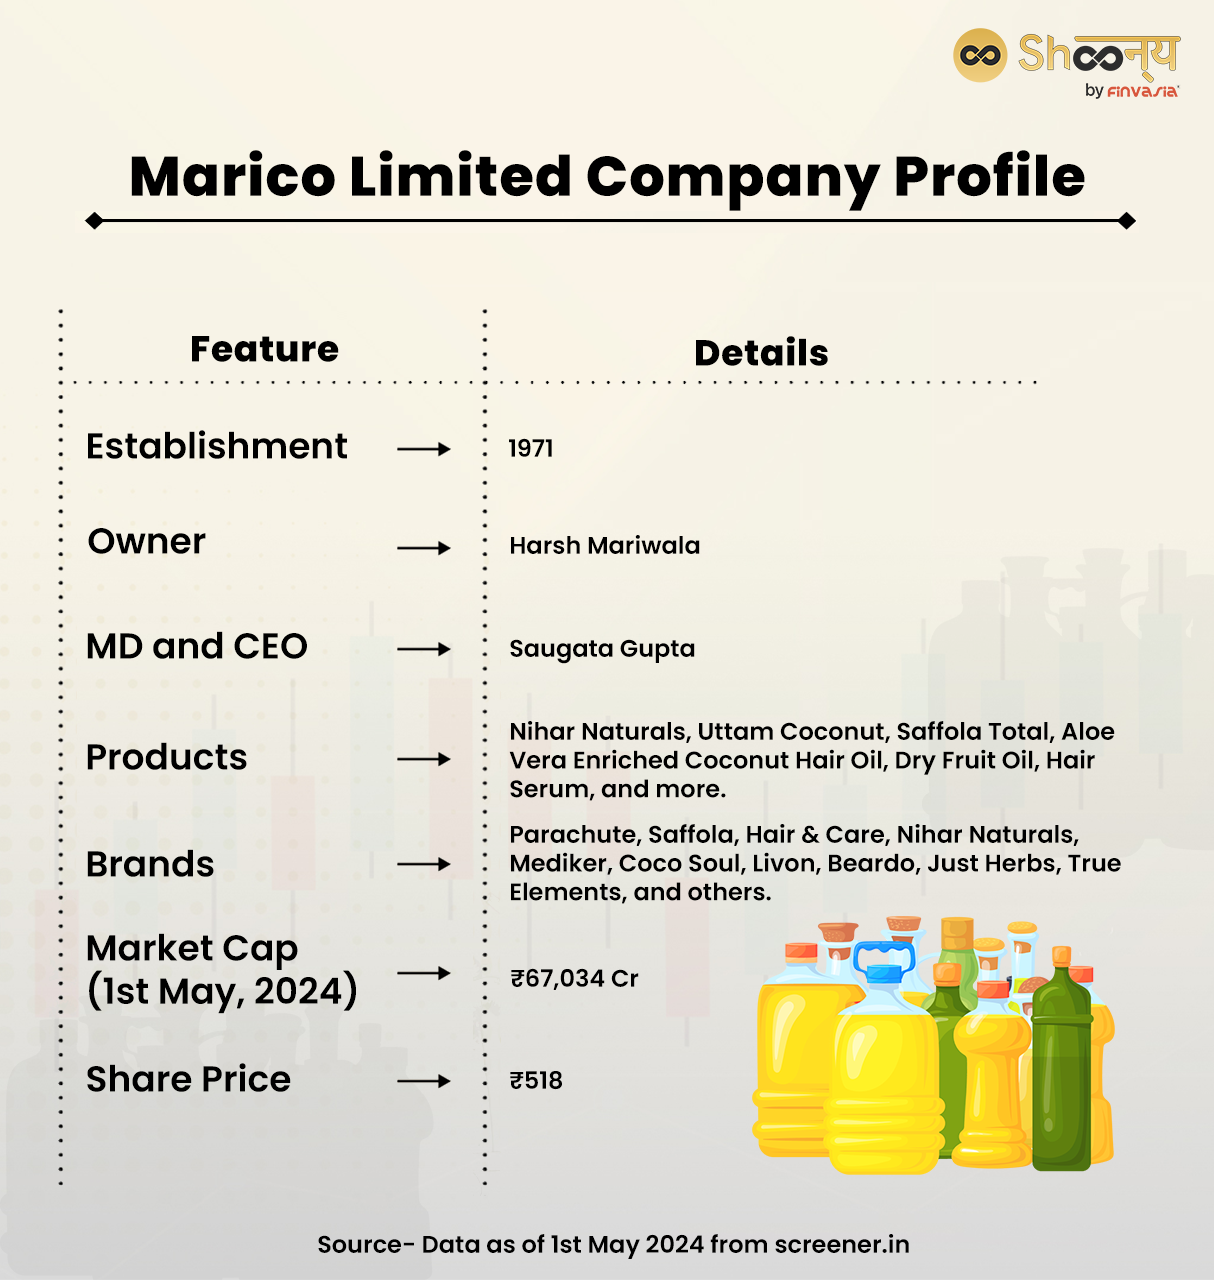 Marico Limited Company Profile